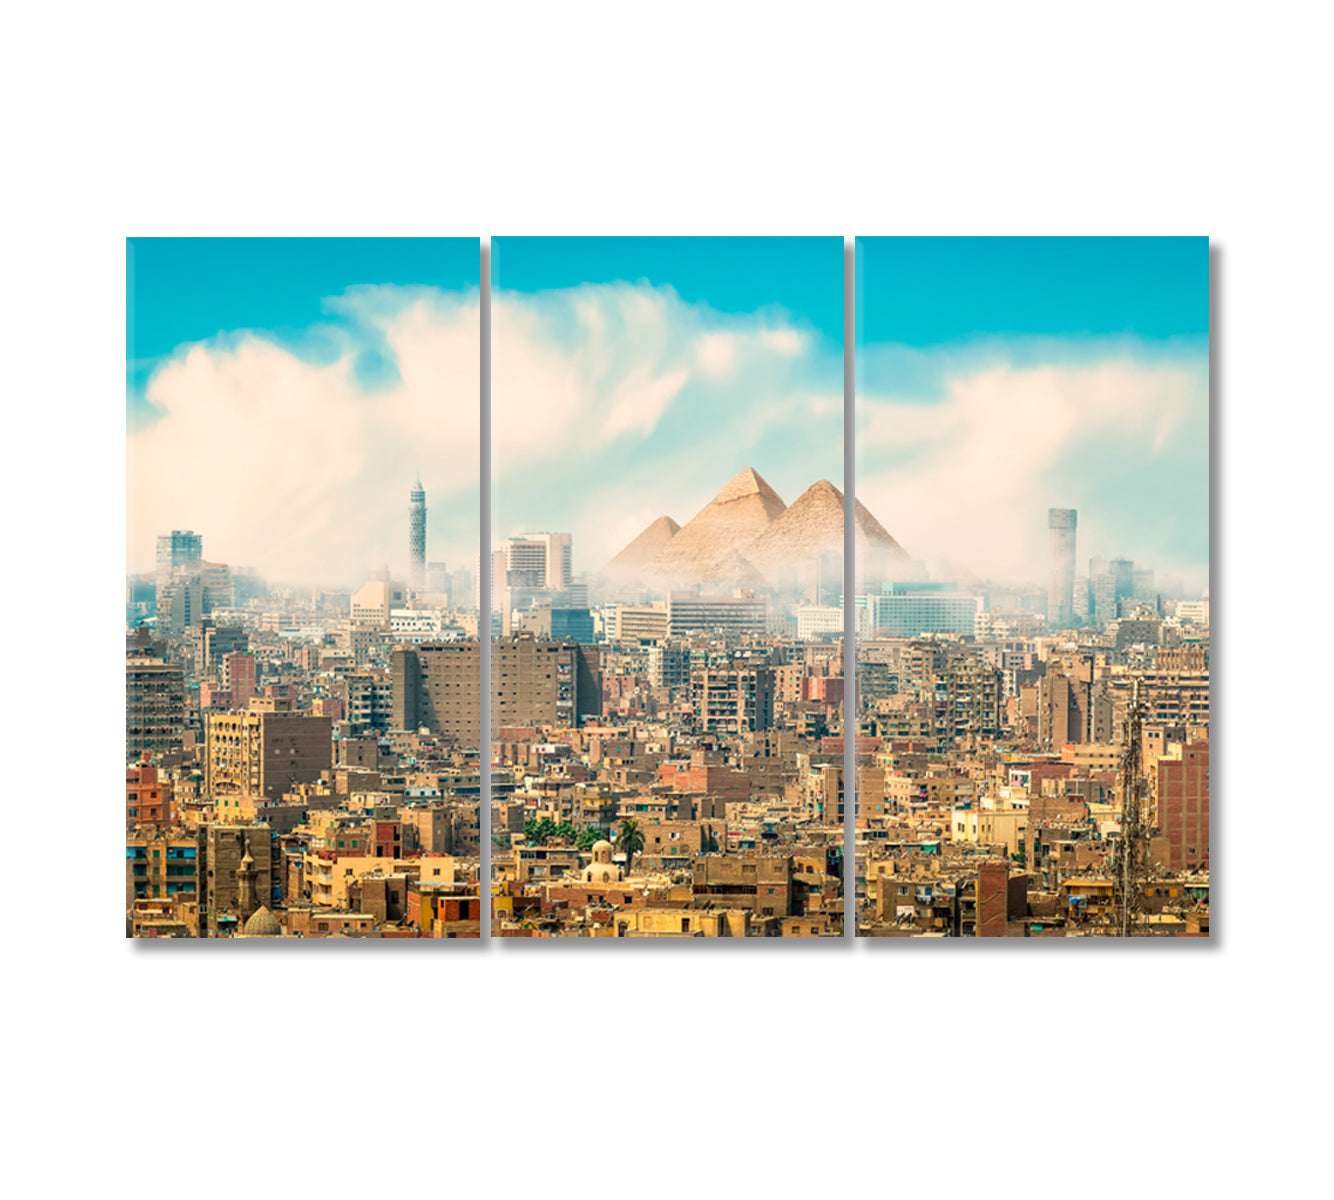 Cairo City with Pyramid Egypt Canvas Print-Canvas Print-CetArt-3 Panels-36x24 inches-CetArt